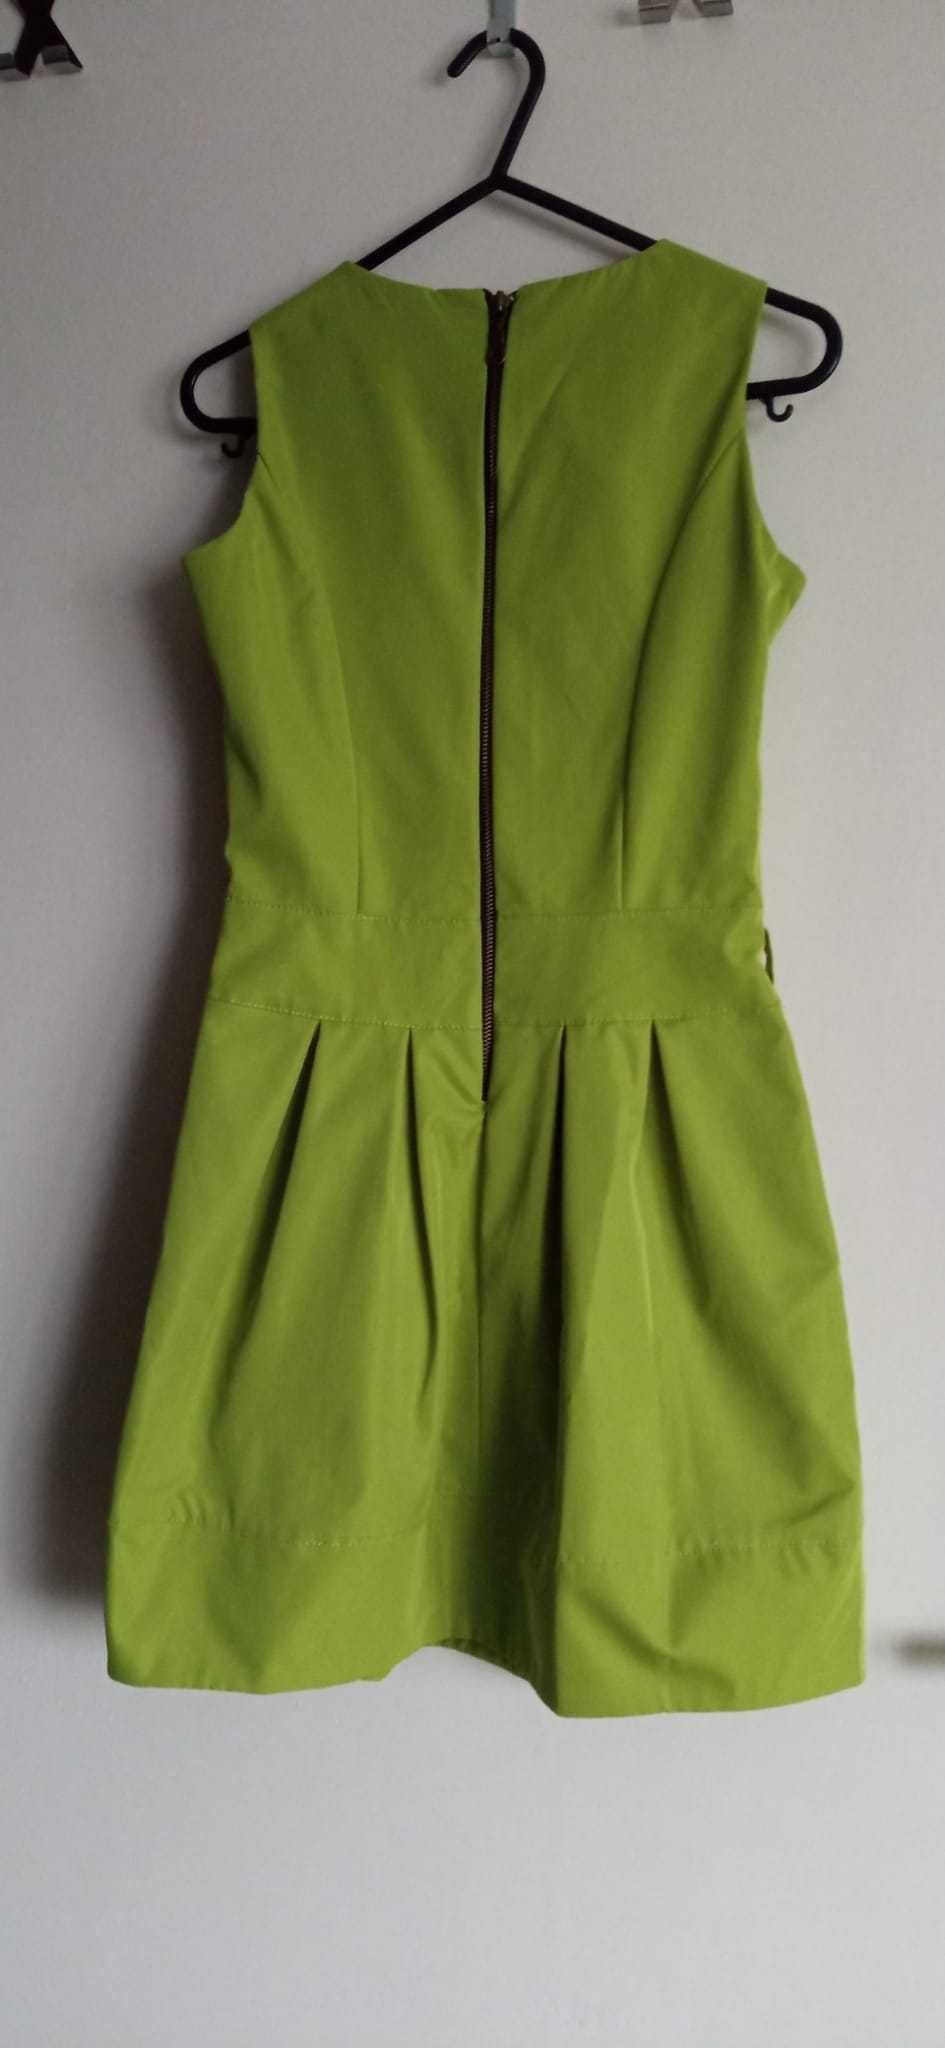 Zielona sukienka, typu bombka